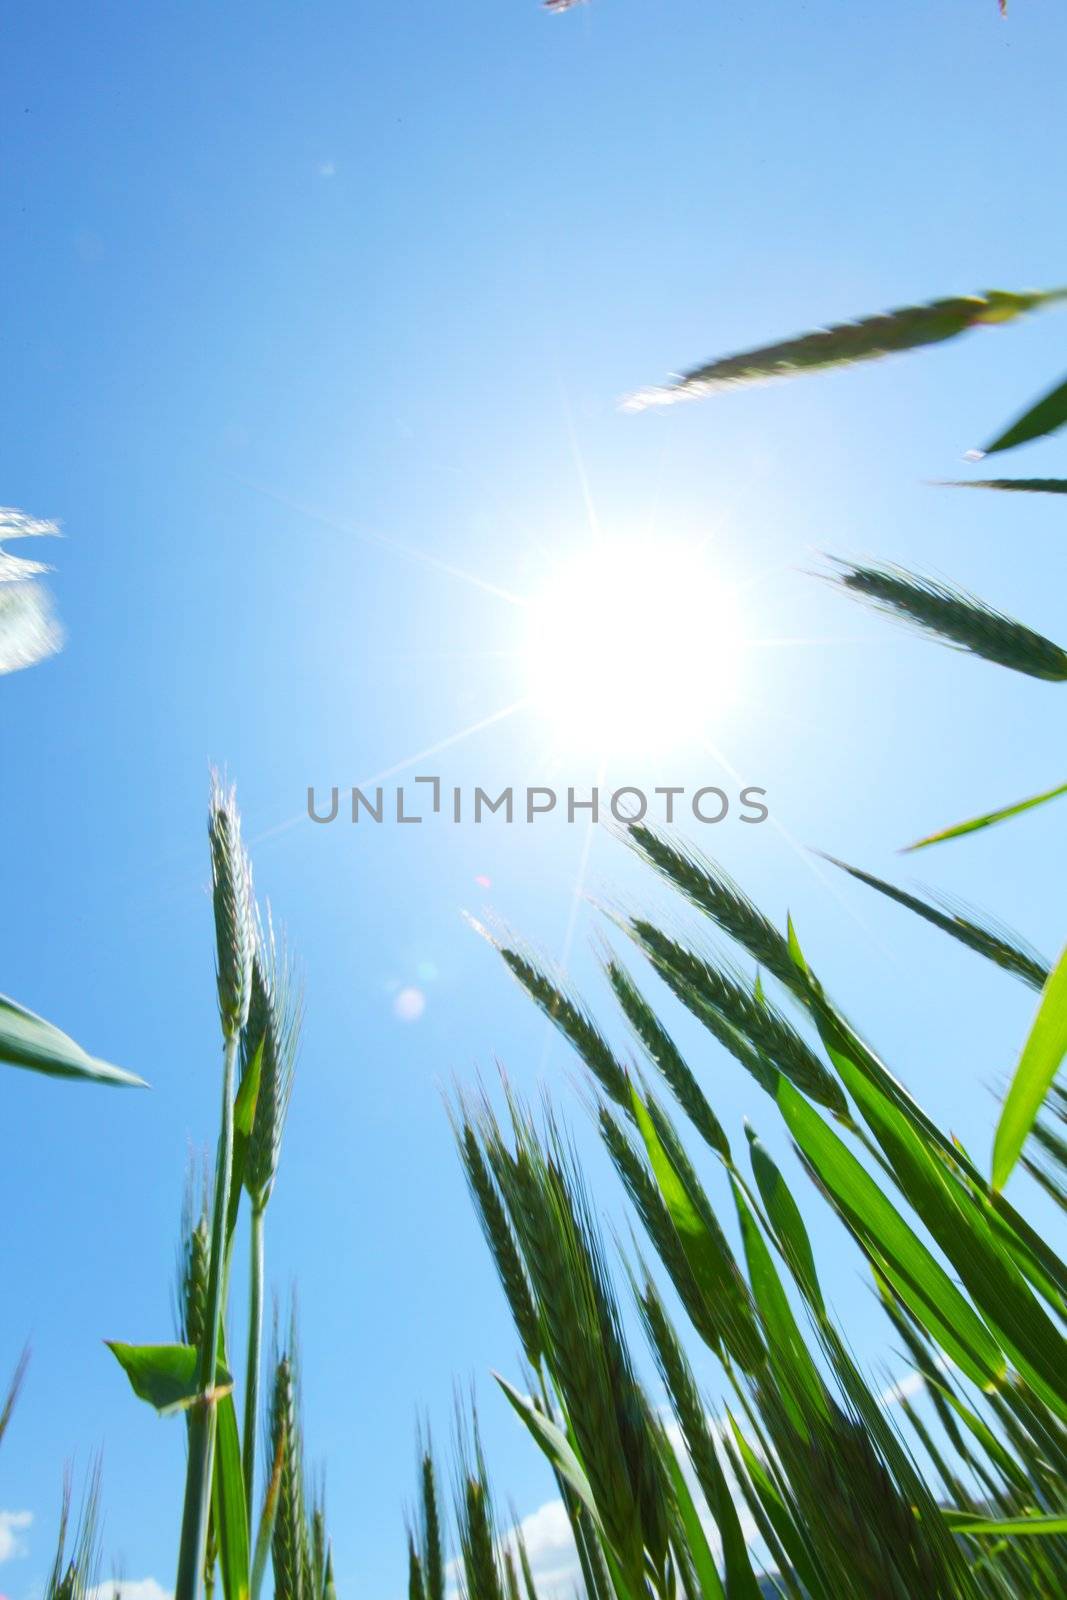 Summer field of wheat by Yellowj